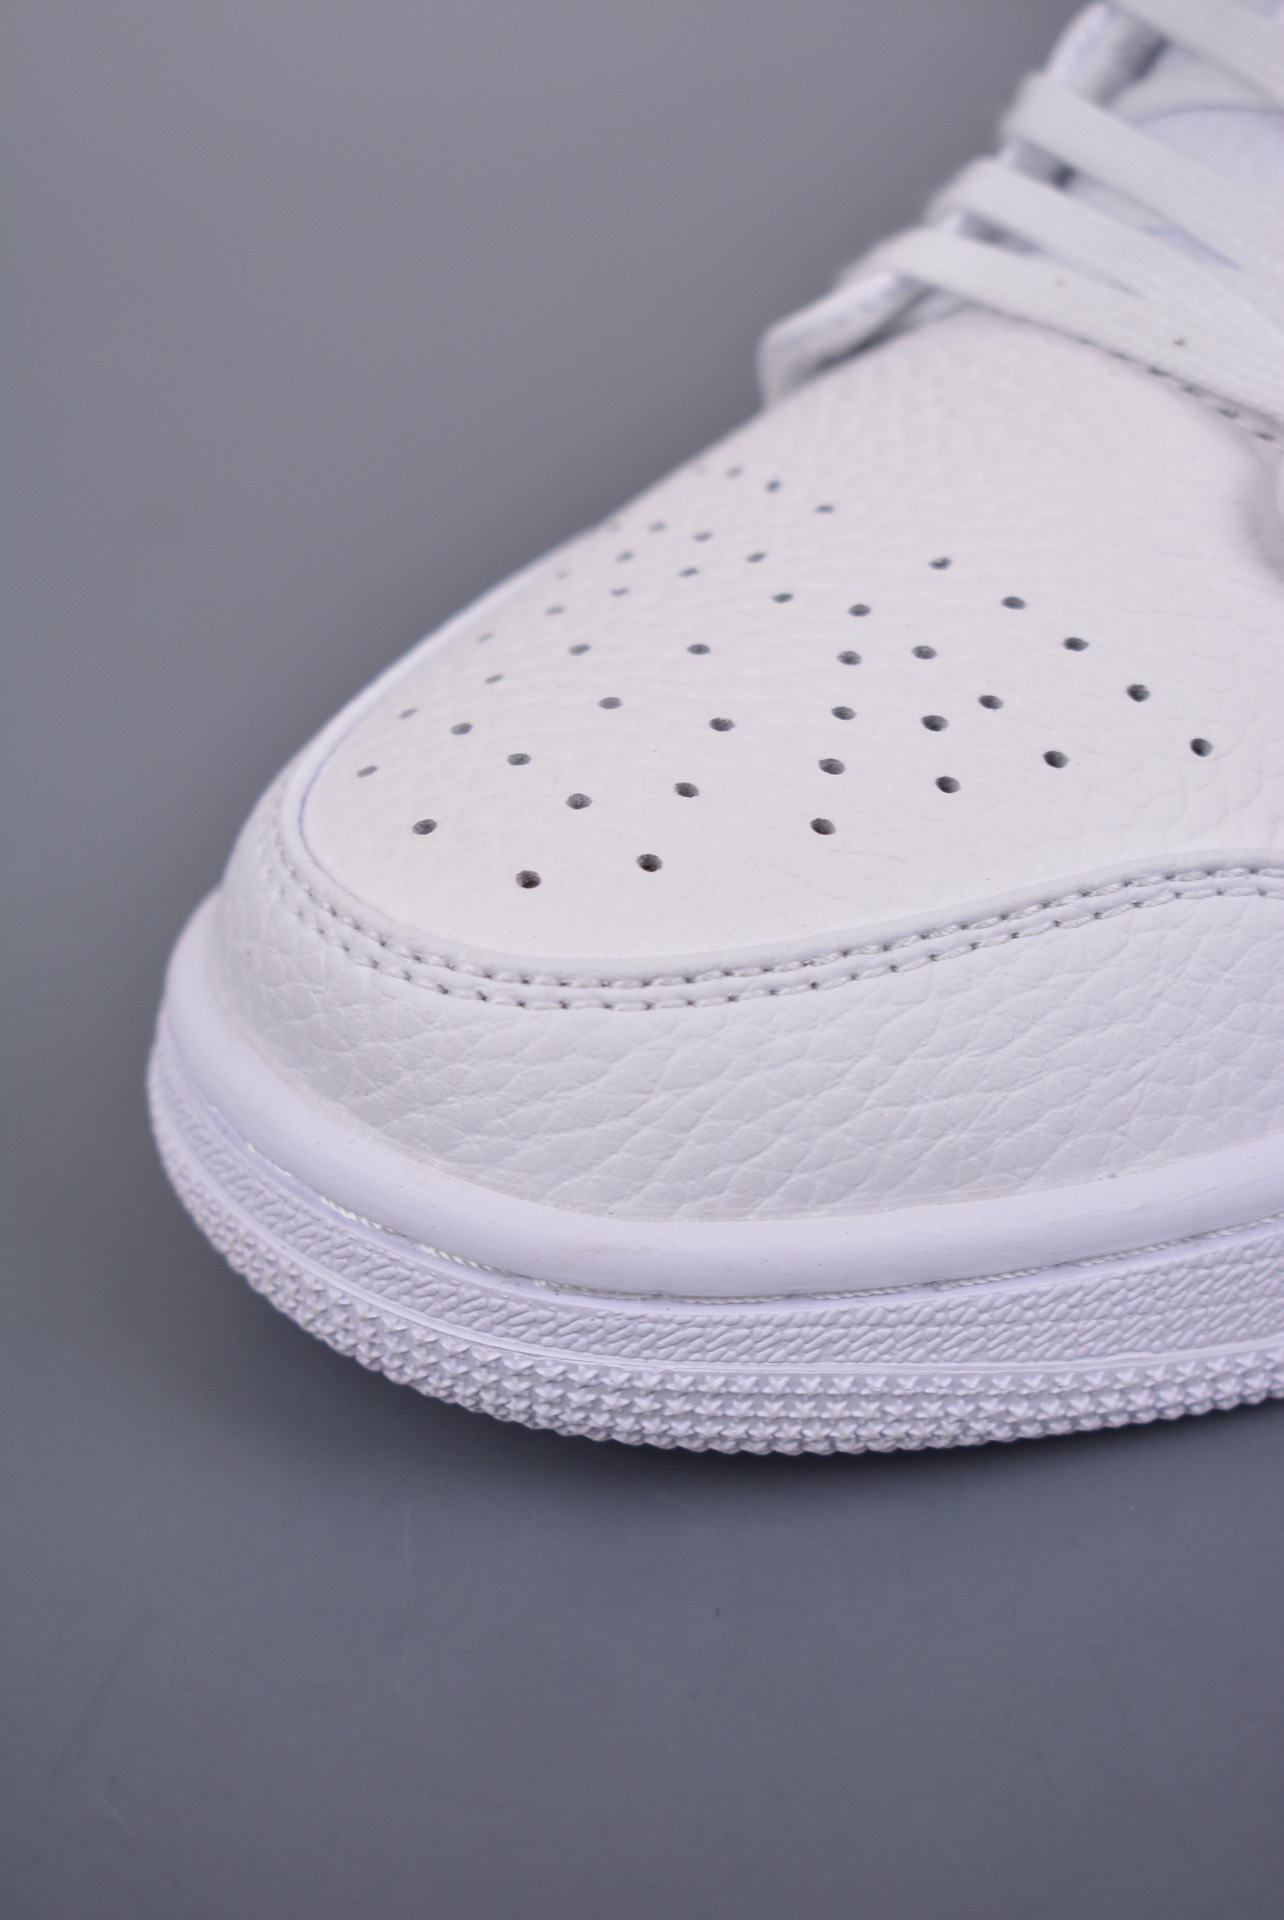 Giày sneaker Nam - N1ke Air Jord4n 1 Low &quot;White/Obsidian/Indian&quot; / Size 38-45